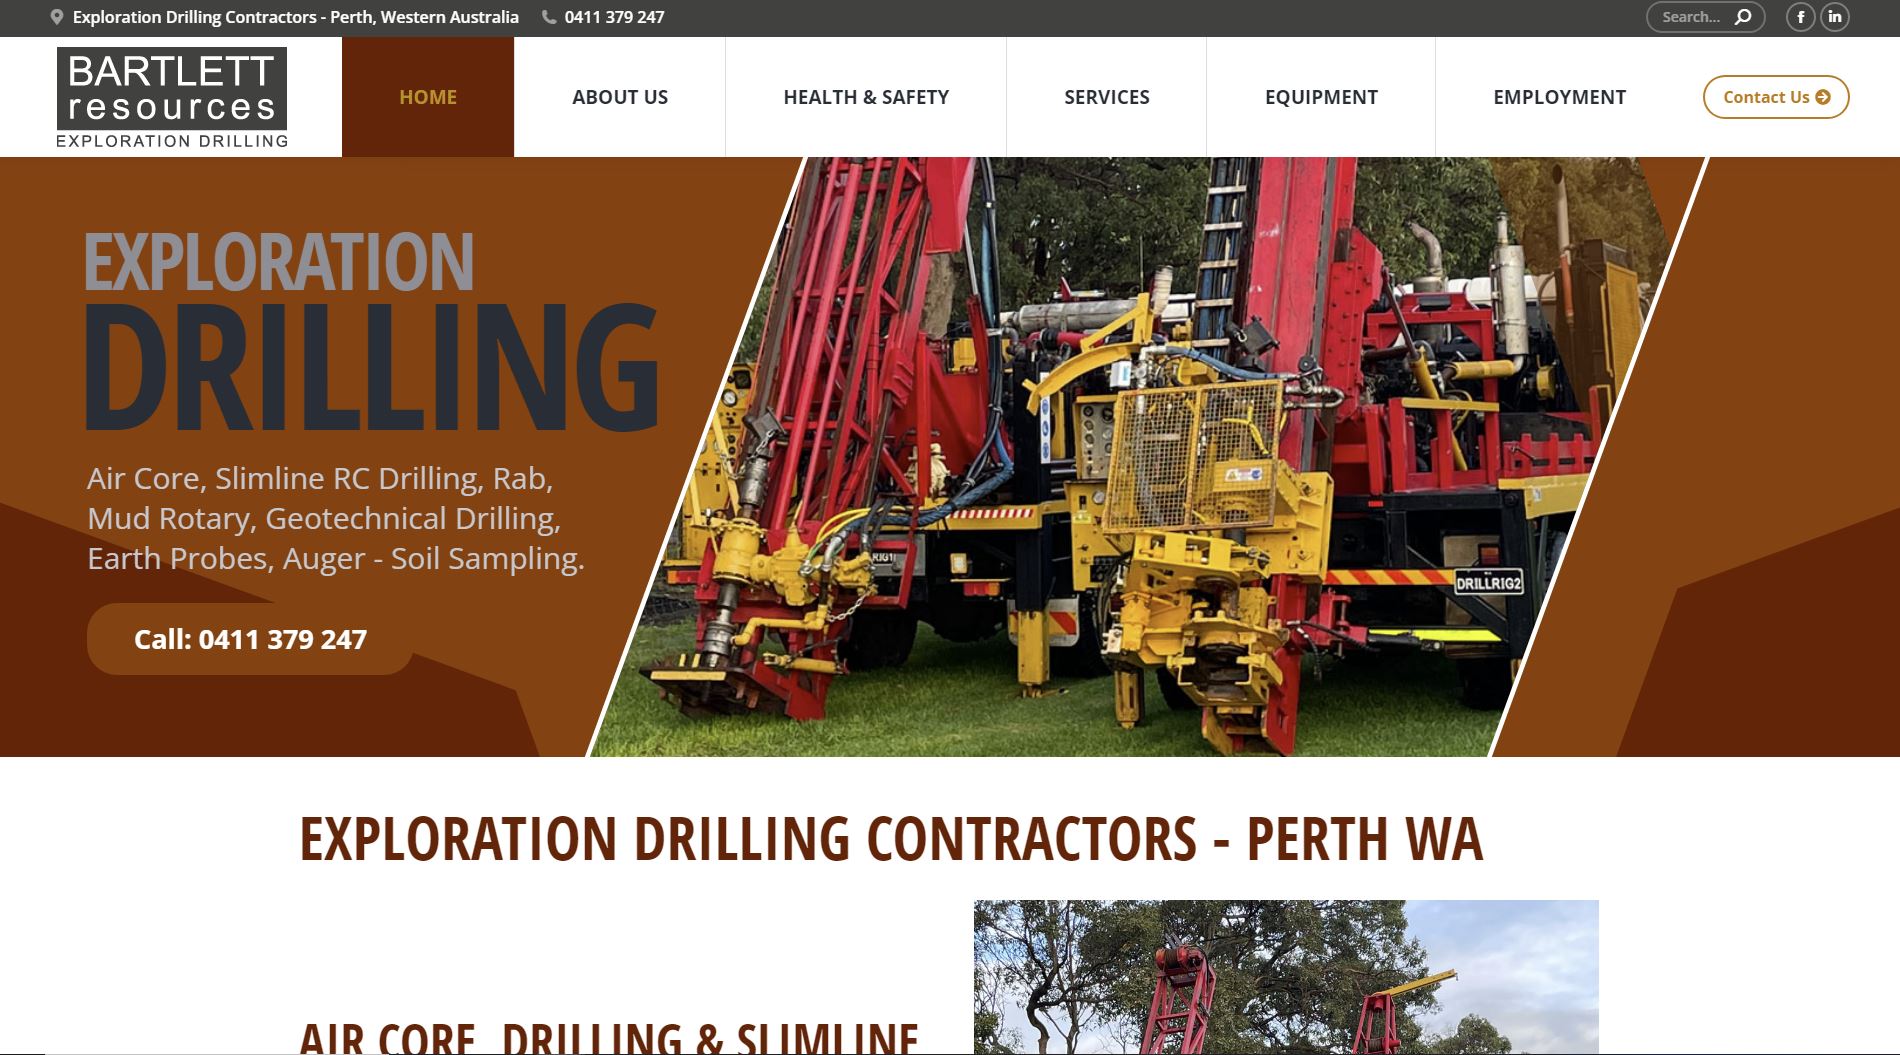 Bartlett Resources - Exploration Drilling Contractors in Perth WA